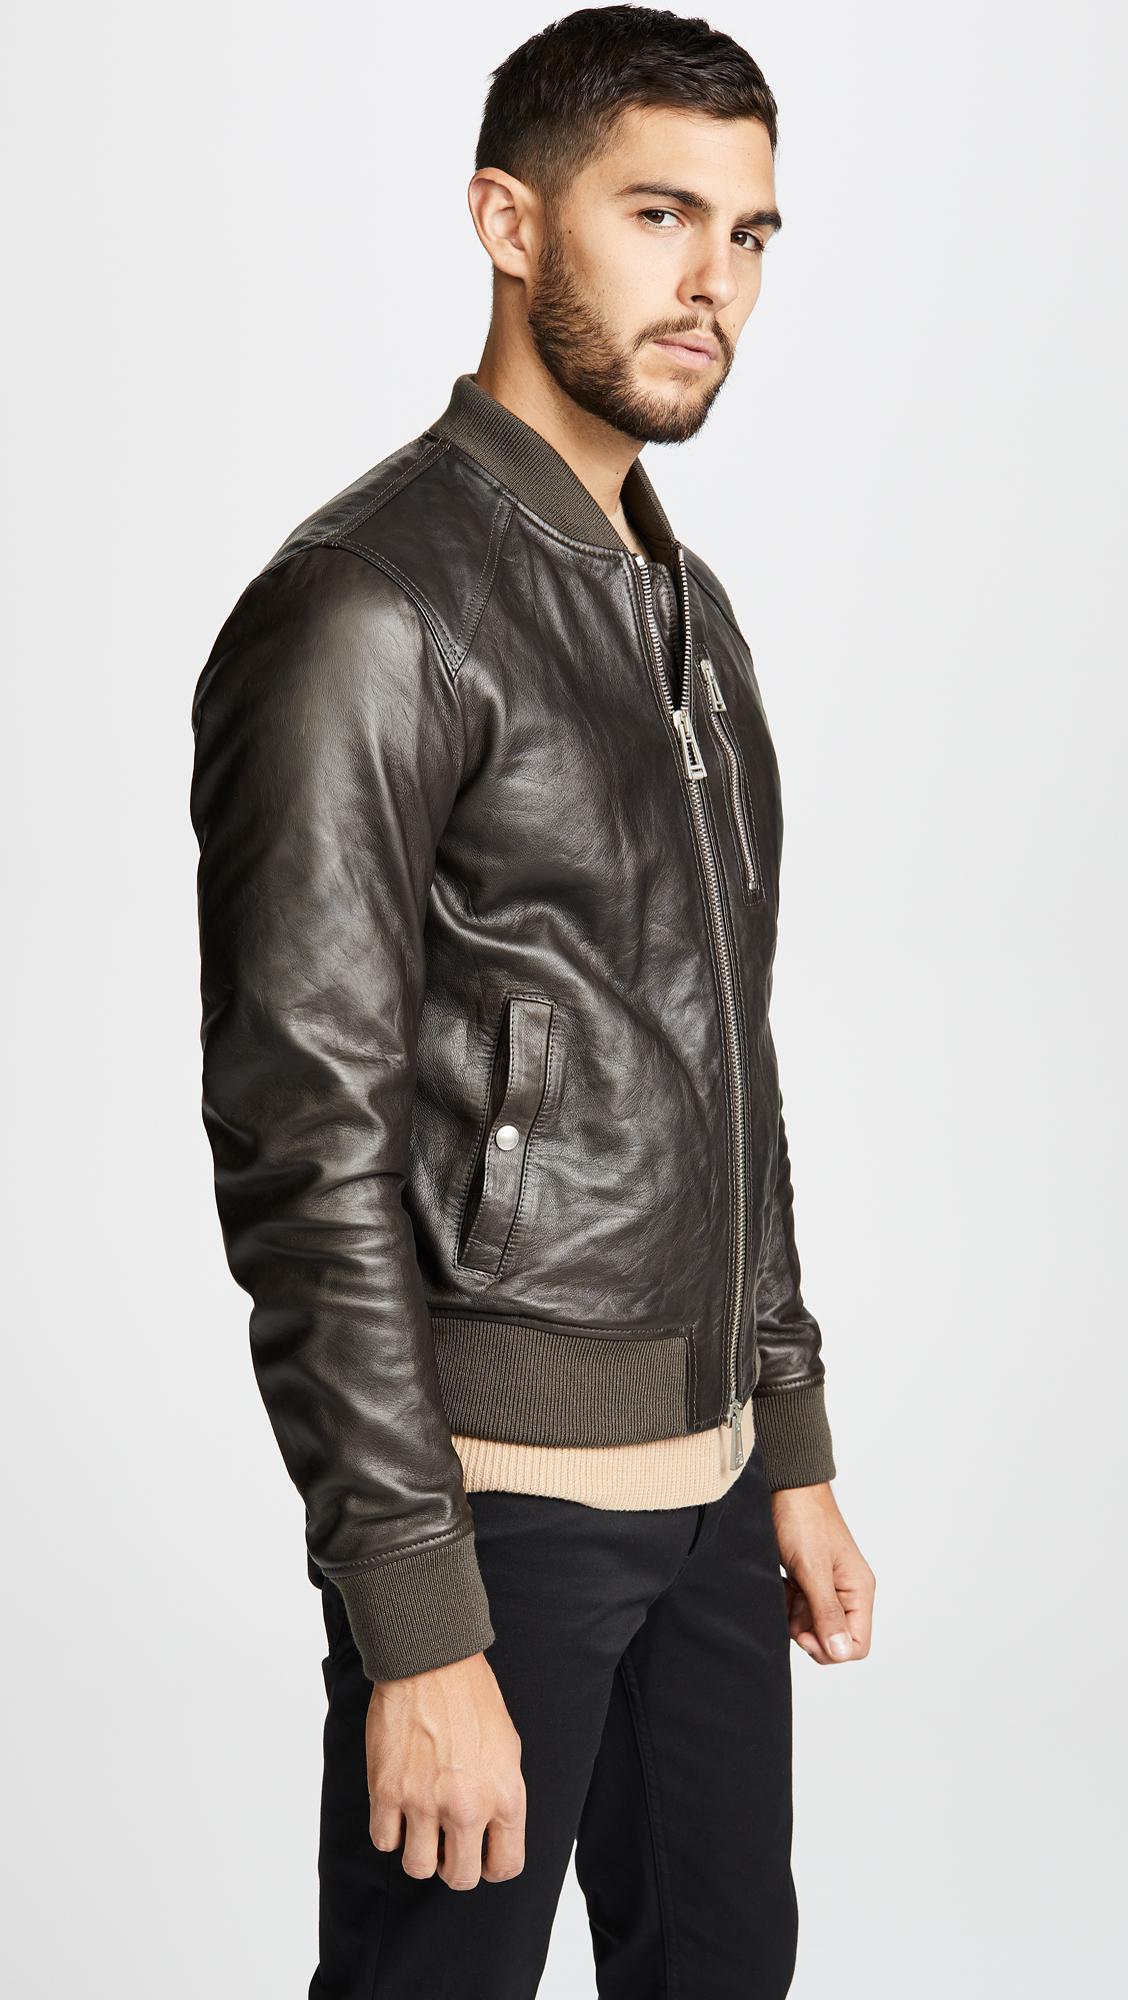 Belstaff Clenshaw Leather Jacket in Black for Men - Lyst